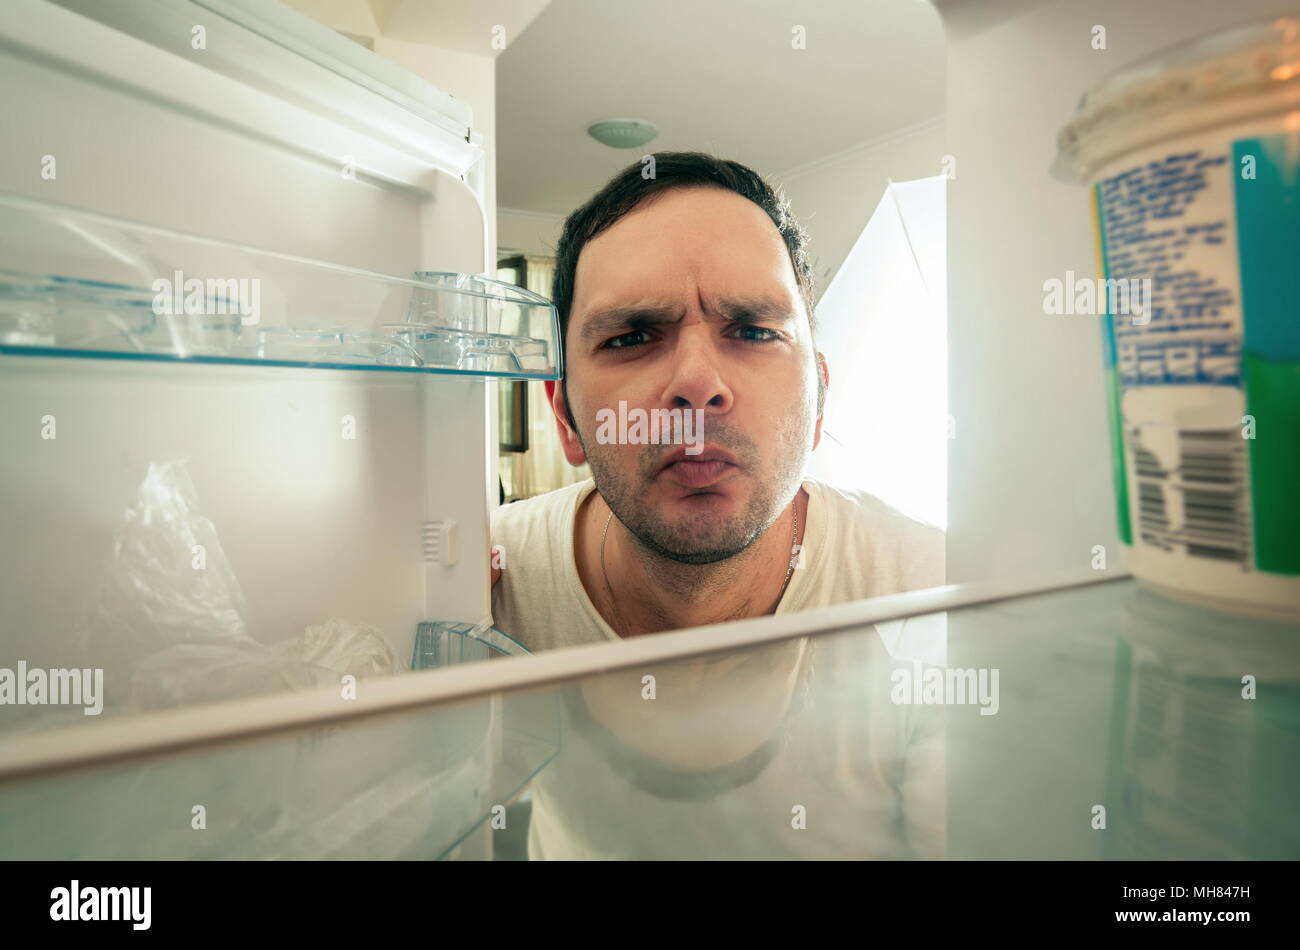 Funny man looking into the fridge Stock Photo